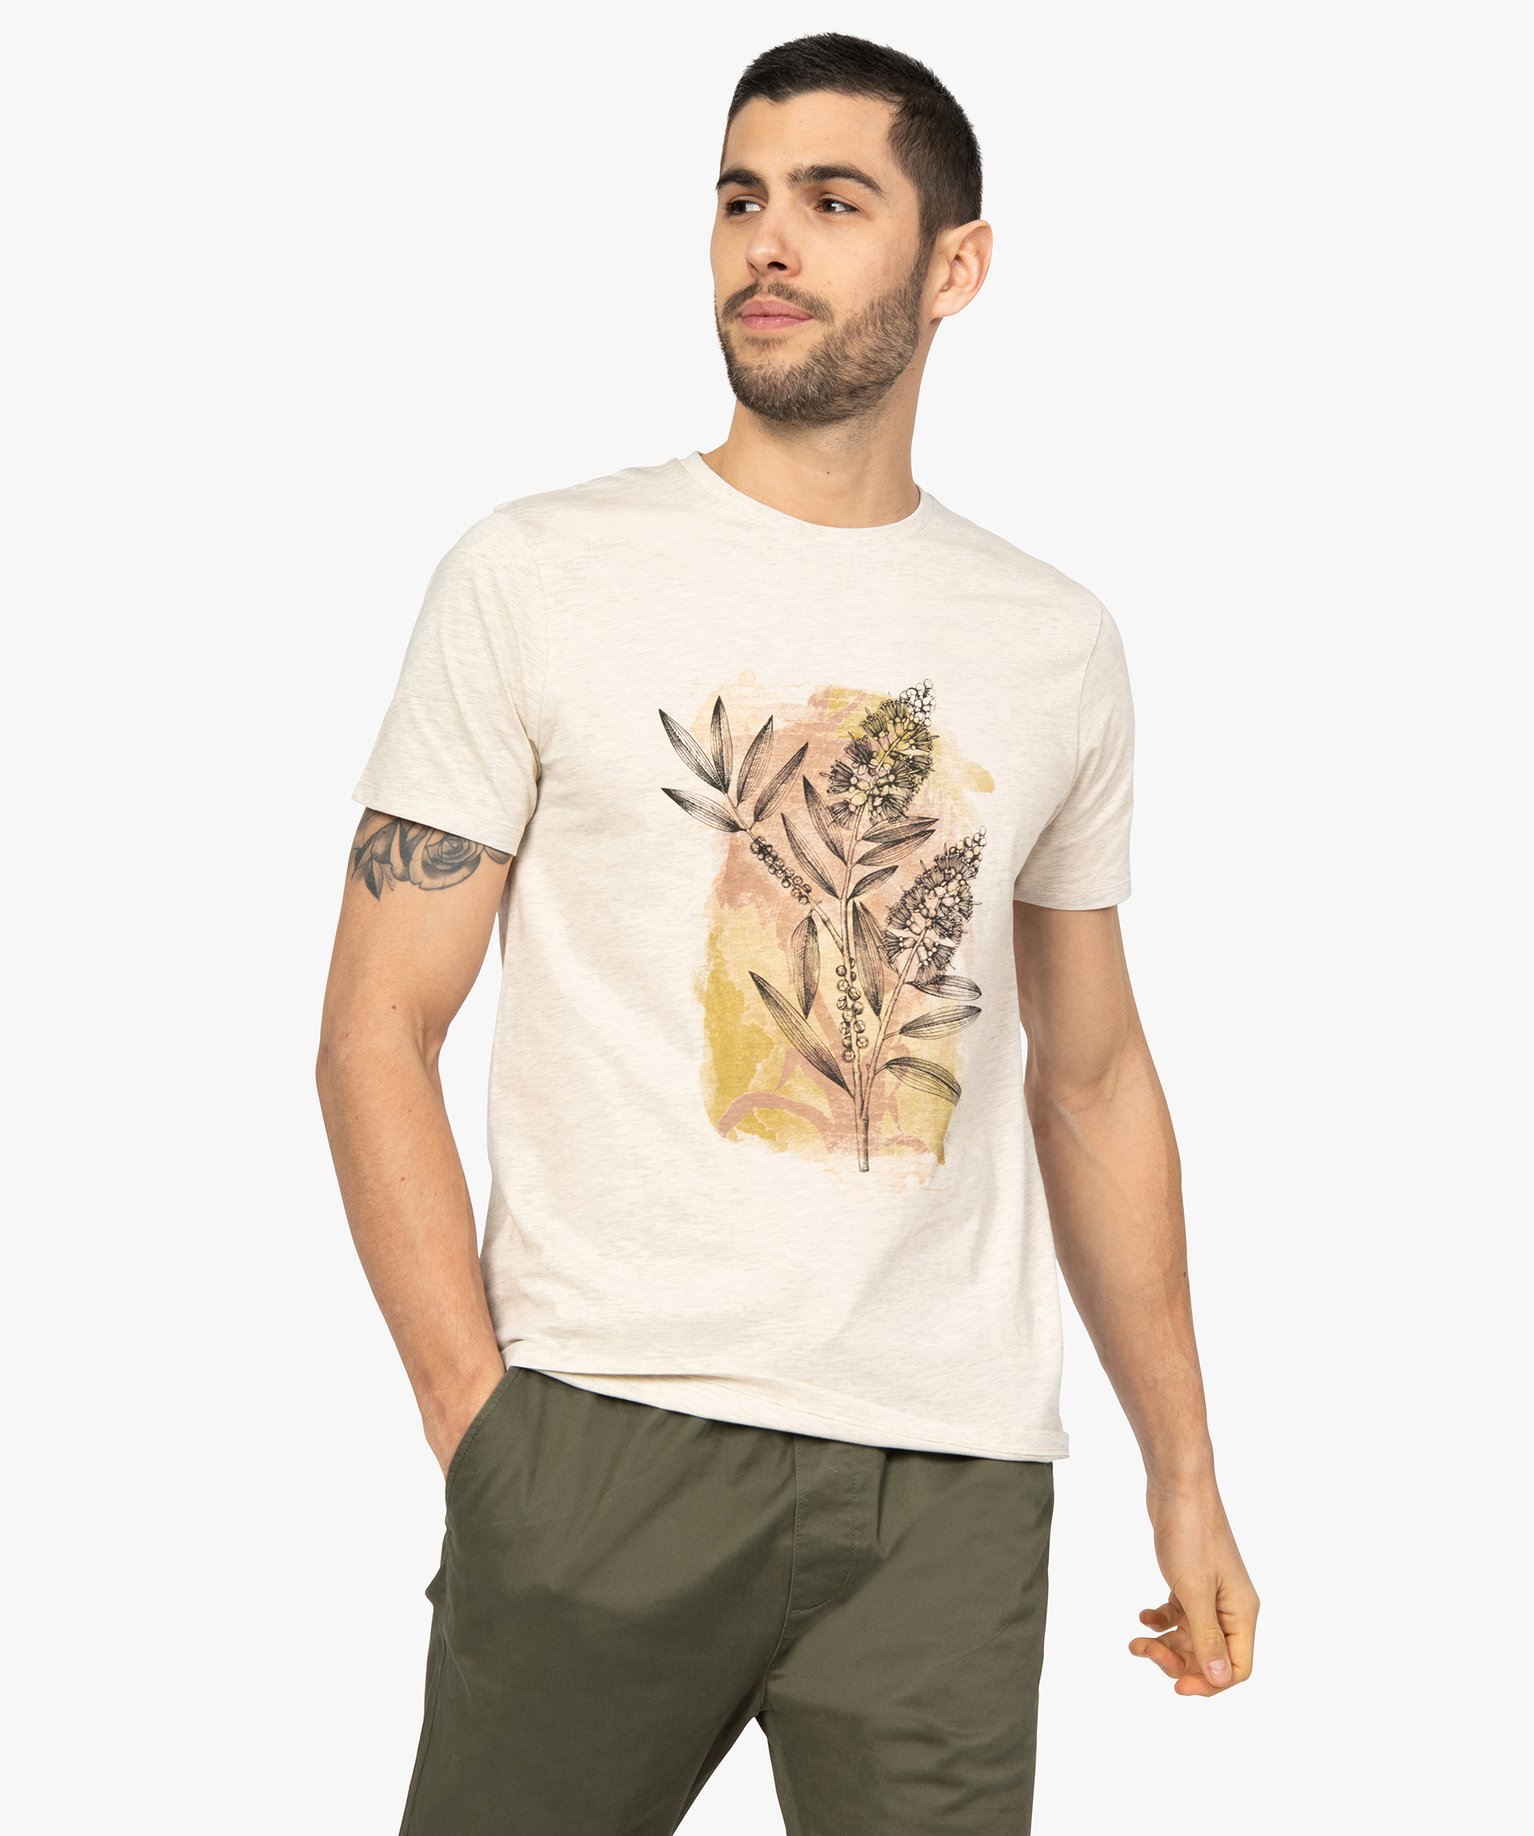 Menda City potato Unravel Gemo vetements tee-shirt homme avec large motif fleuri beige tee-shirts  homme | GÉMO